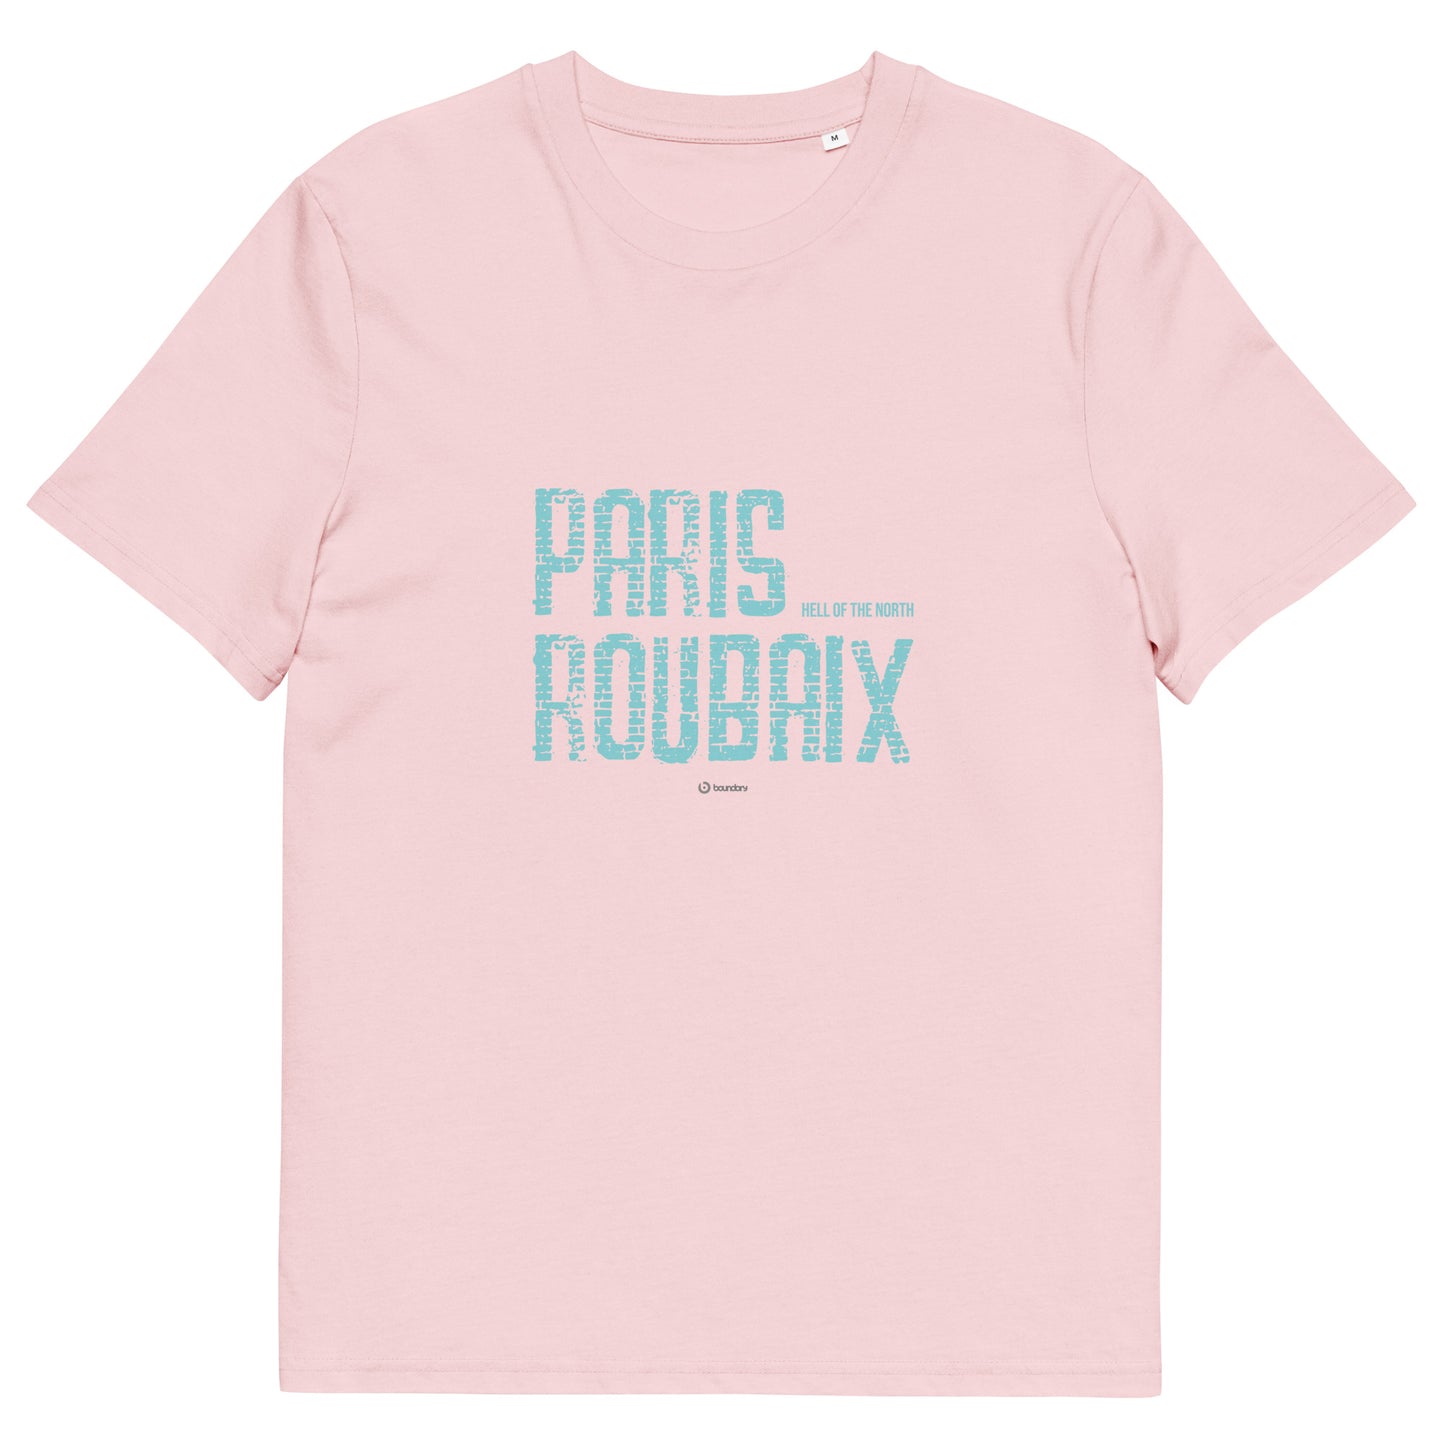 Paris Roubaix - Hell of the North cycling unisex organic cotton t-shirt